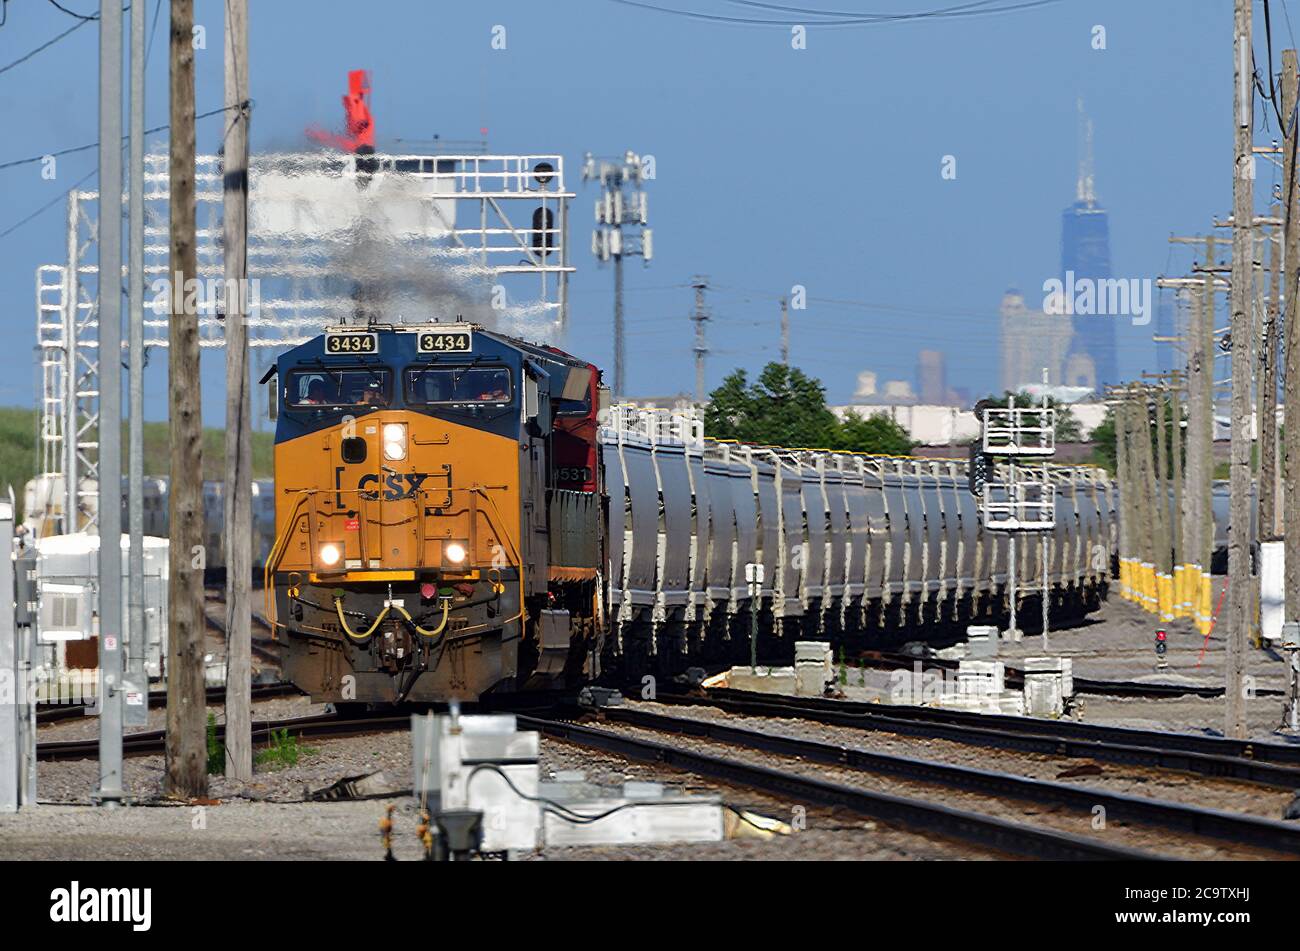 BENSENVILLE, Illinois, USA. Ein Lokomotivpaar führt einen Güterzug aus einem Güterbahnhof. Stockfoto